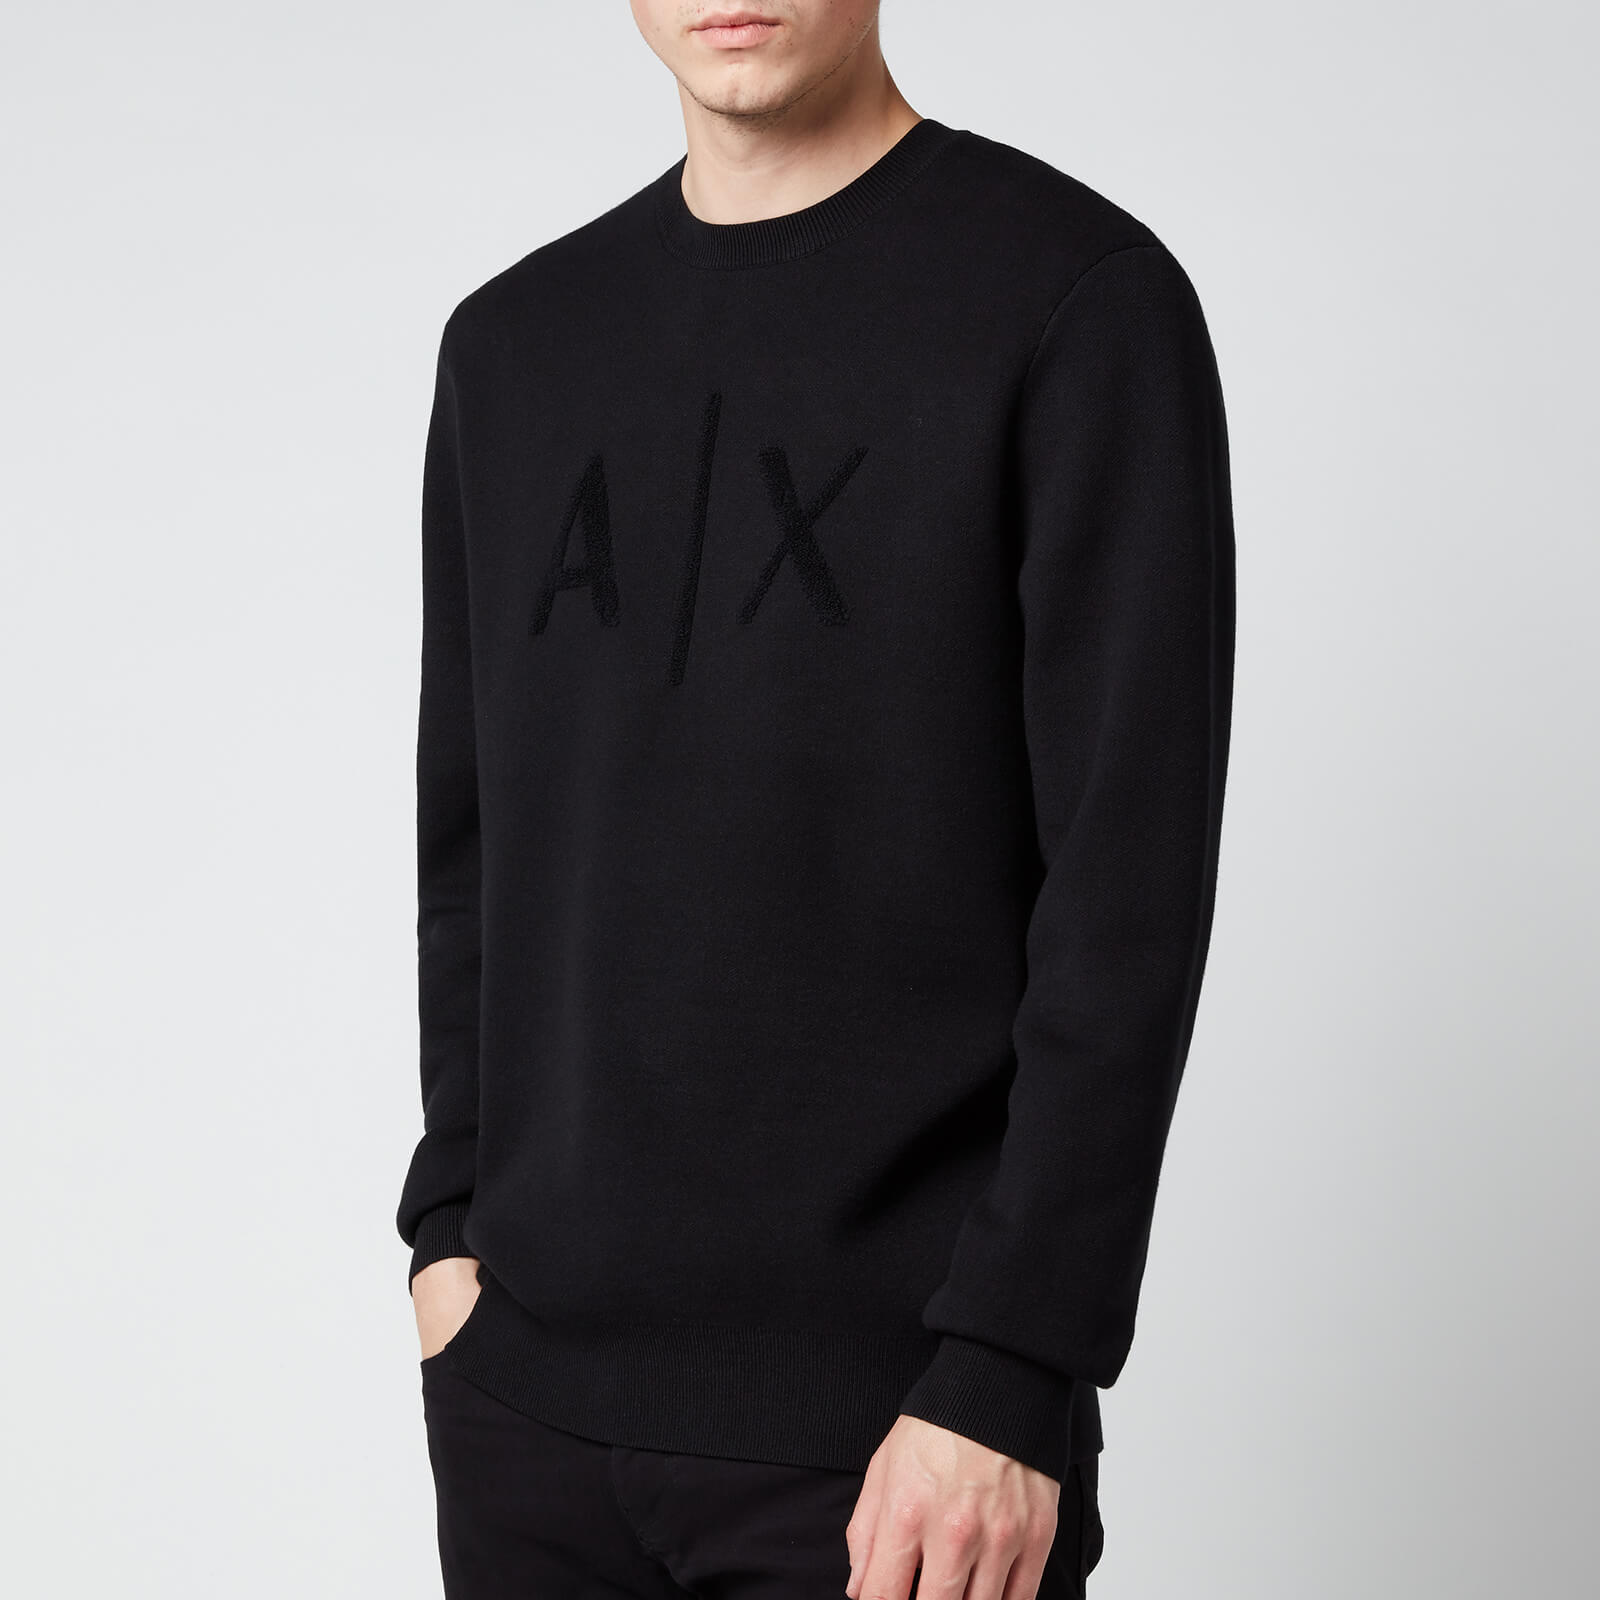 Armani Exchange Men's Ax Knit Jumper - Black - S